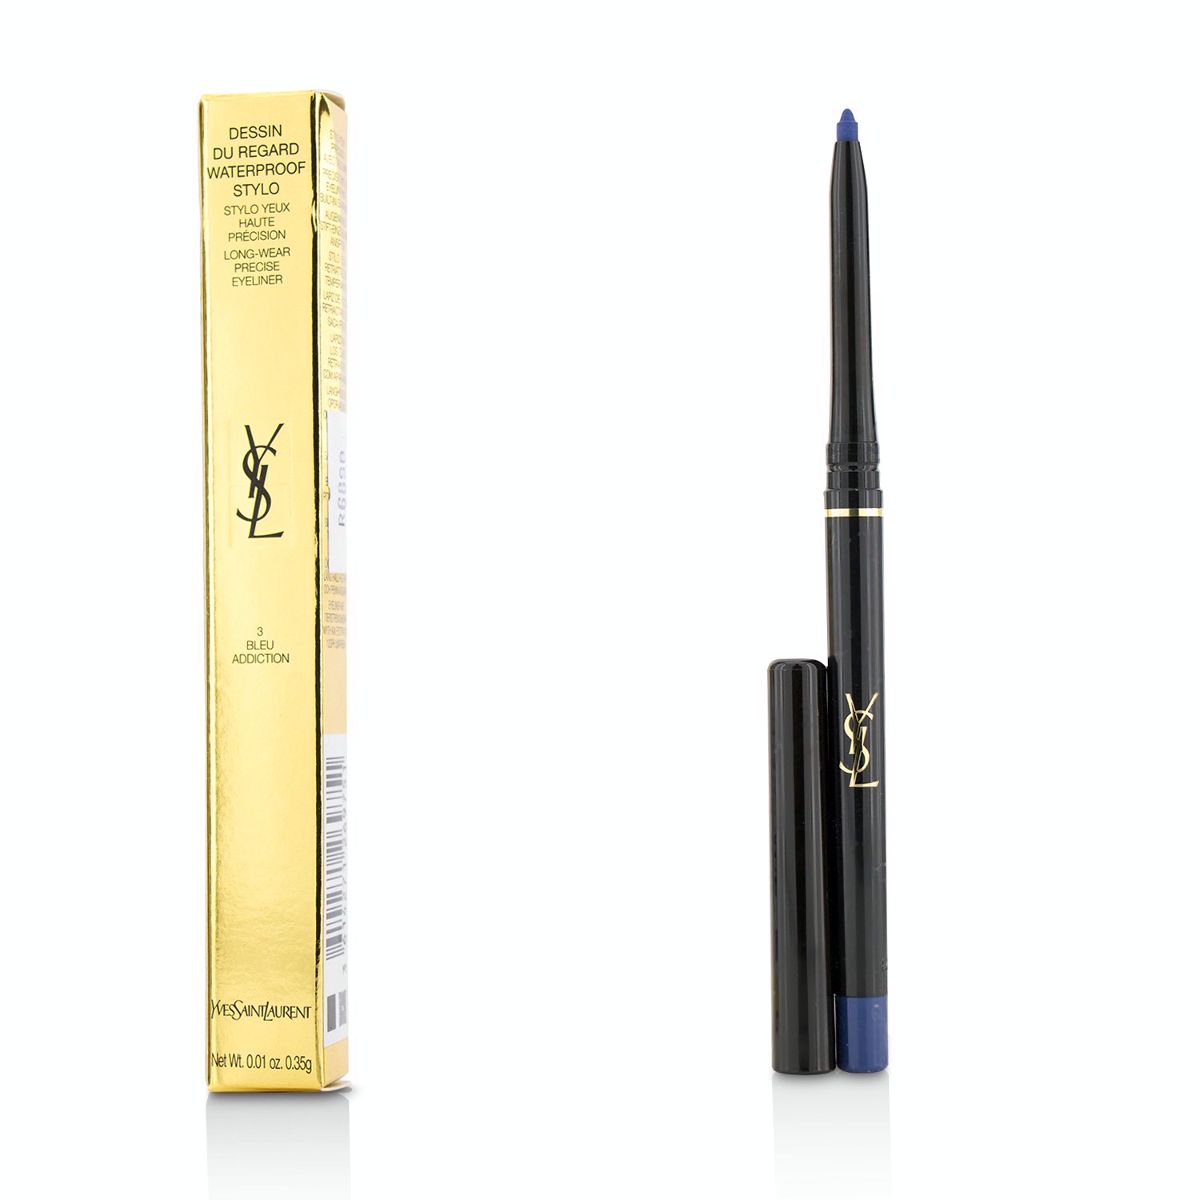 Dessin Du Regard Waterproof Stylo Long Wear Precise Eyeliner - # 3 Bleu Addiction Yves Saint Laurent Image